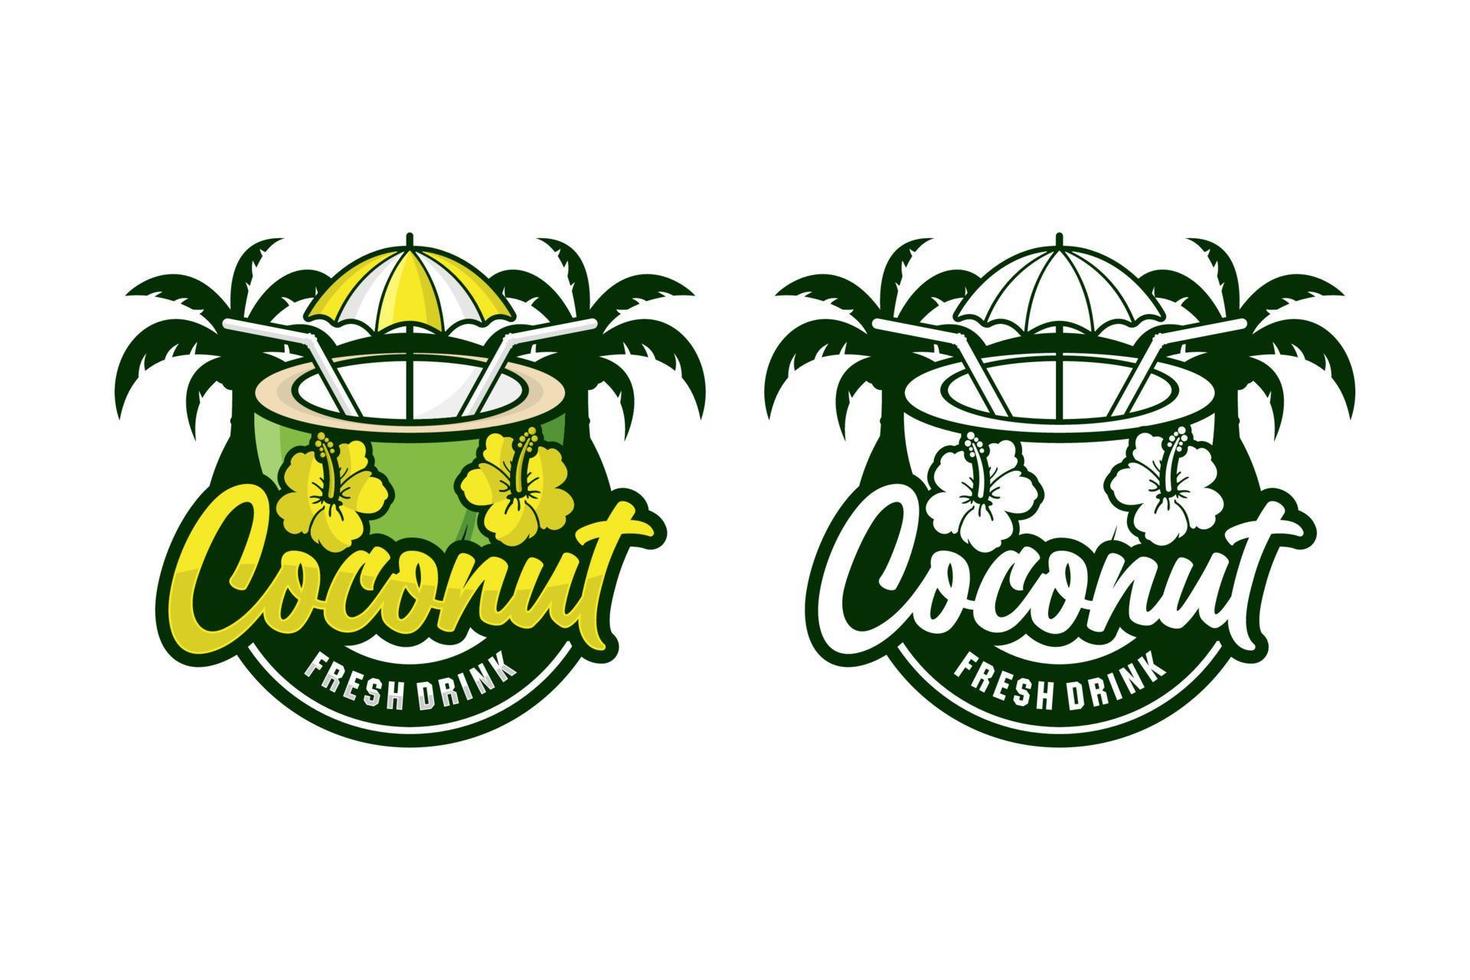 Coconut fresh drink design illustration logo vector